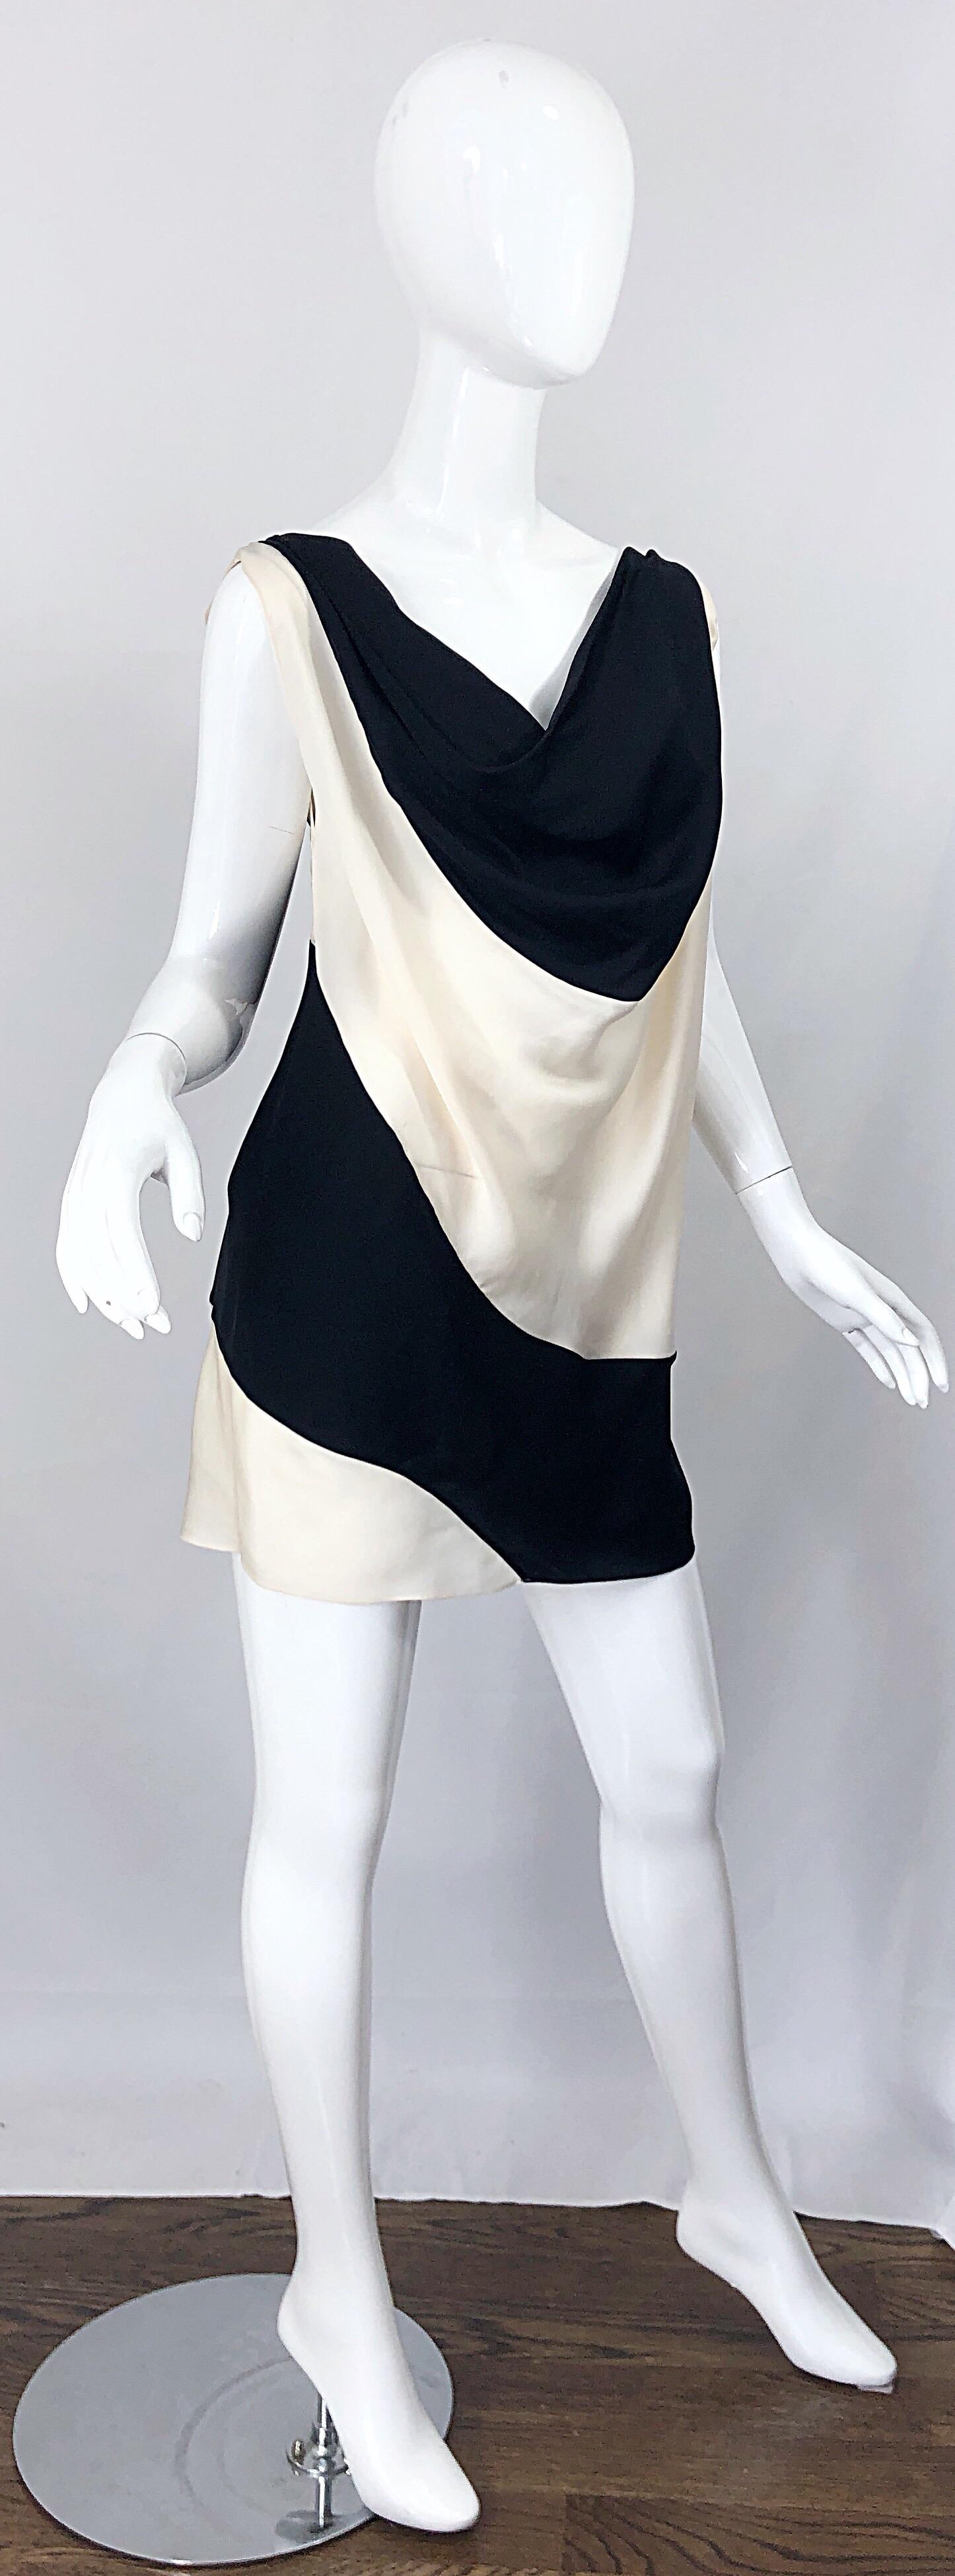 donna karan black and white dress